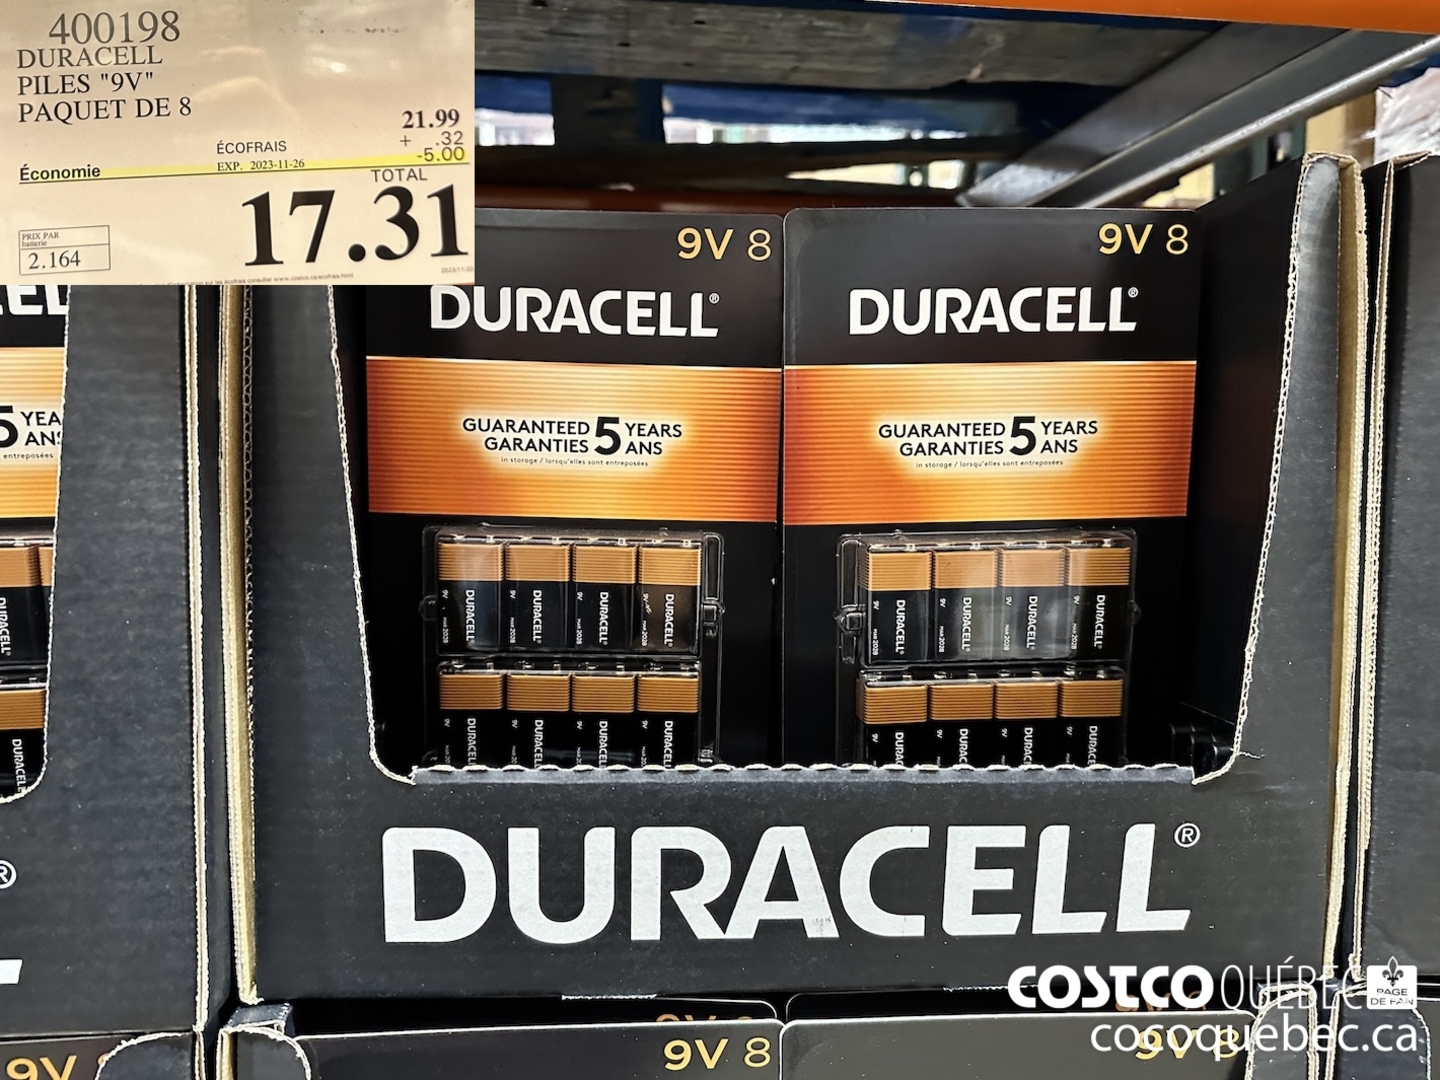 Duracell - Piles 9V, Paquet de 8